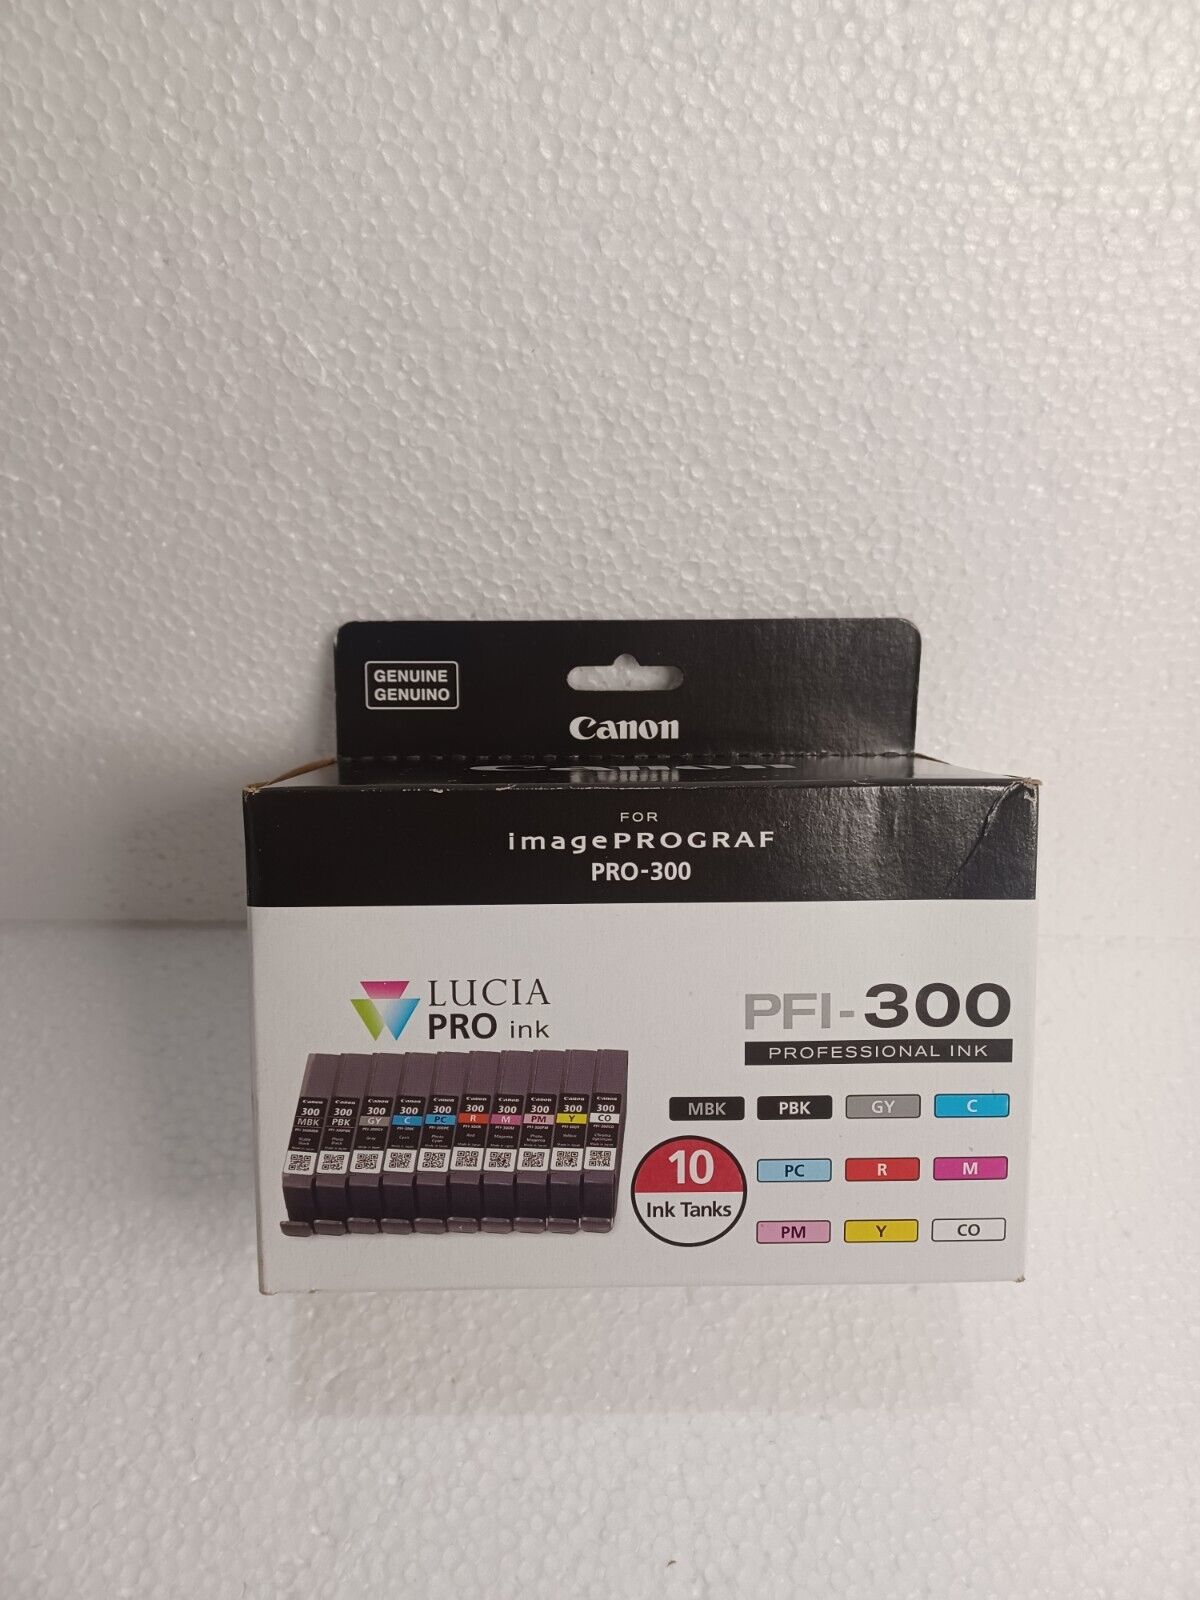 Canon LUCIA PRO PFI-300 Original Ink Cartridge - Value Pack - Photo Black, Matte